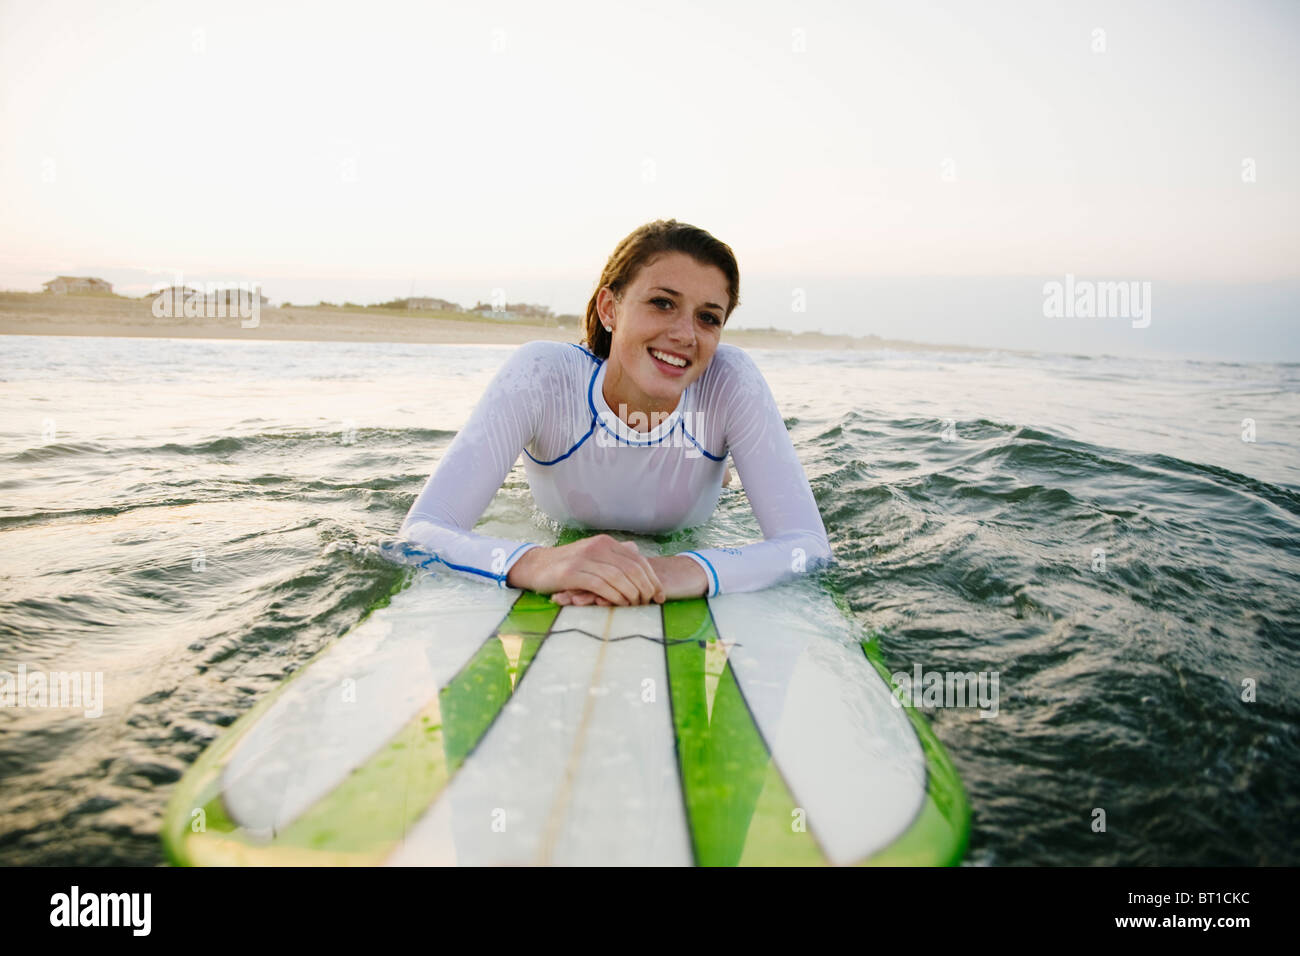 Smiling Caucasian teenage girl leaning on surfboard in ocean Stock Photo